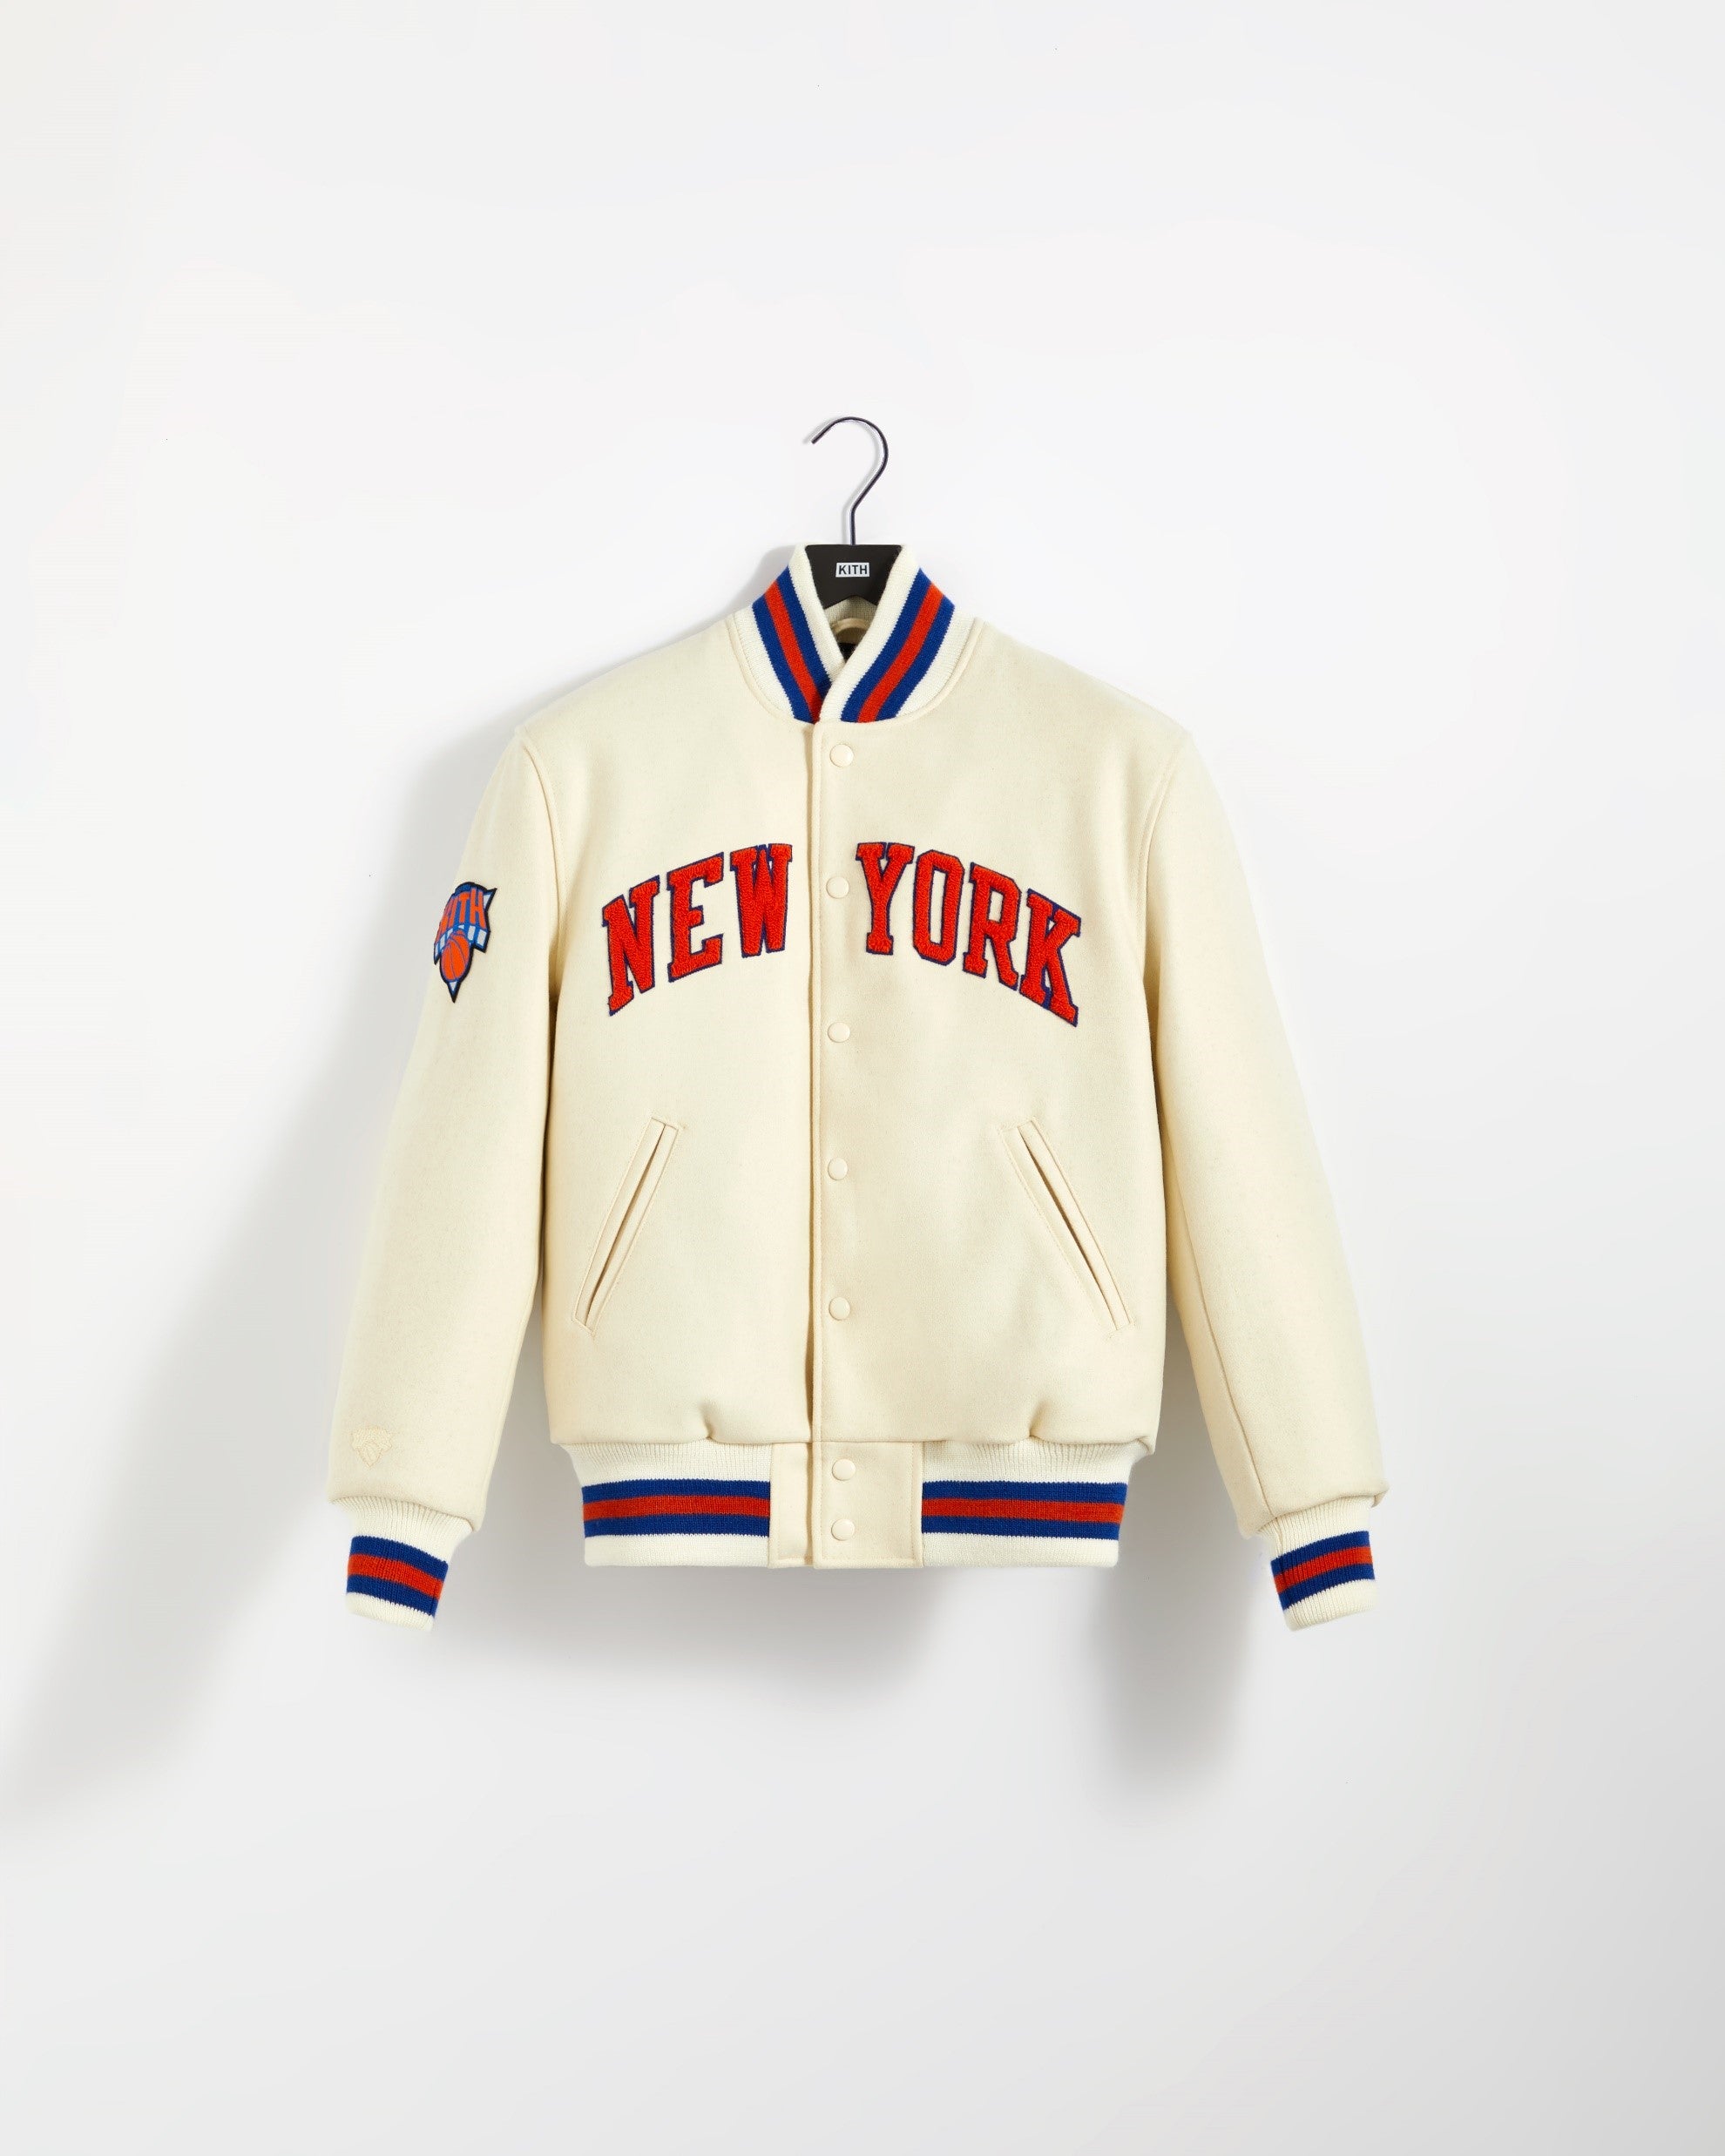 Kith & Golden Bear for New York Knicks | tradexautomotive.com